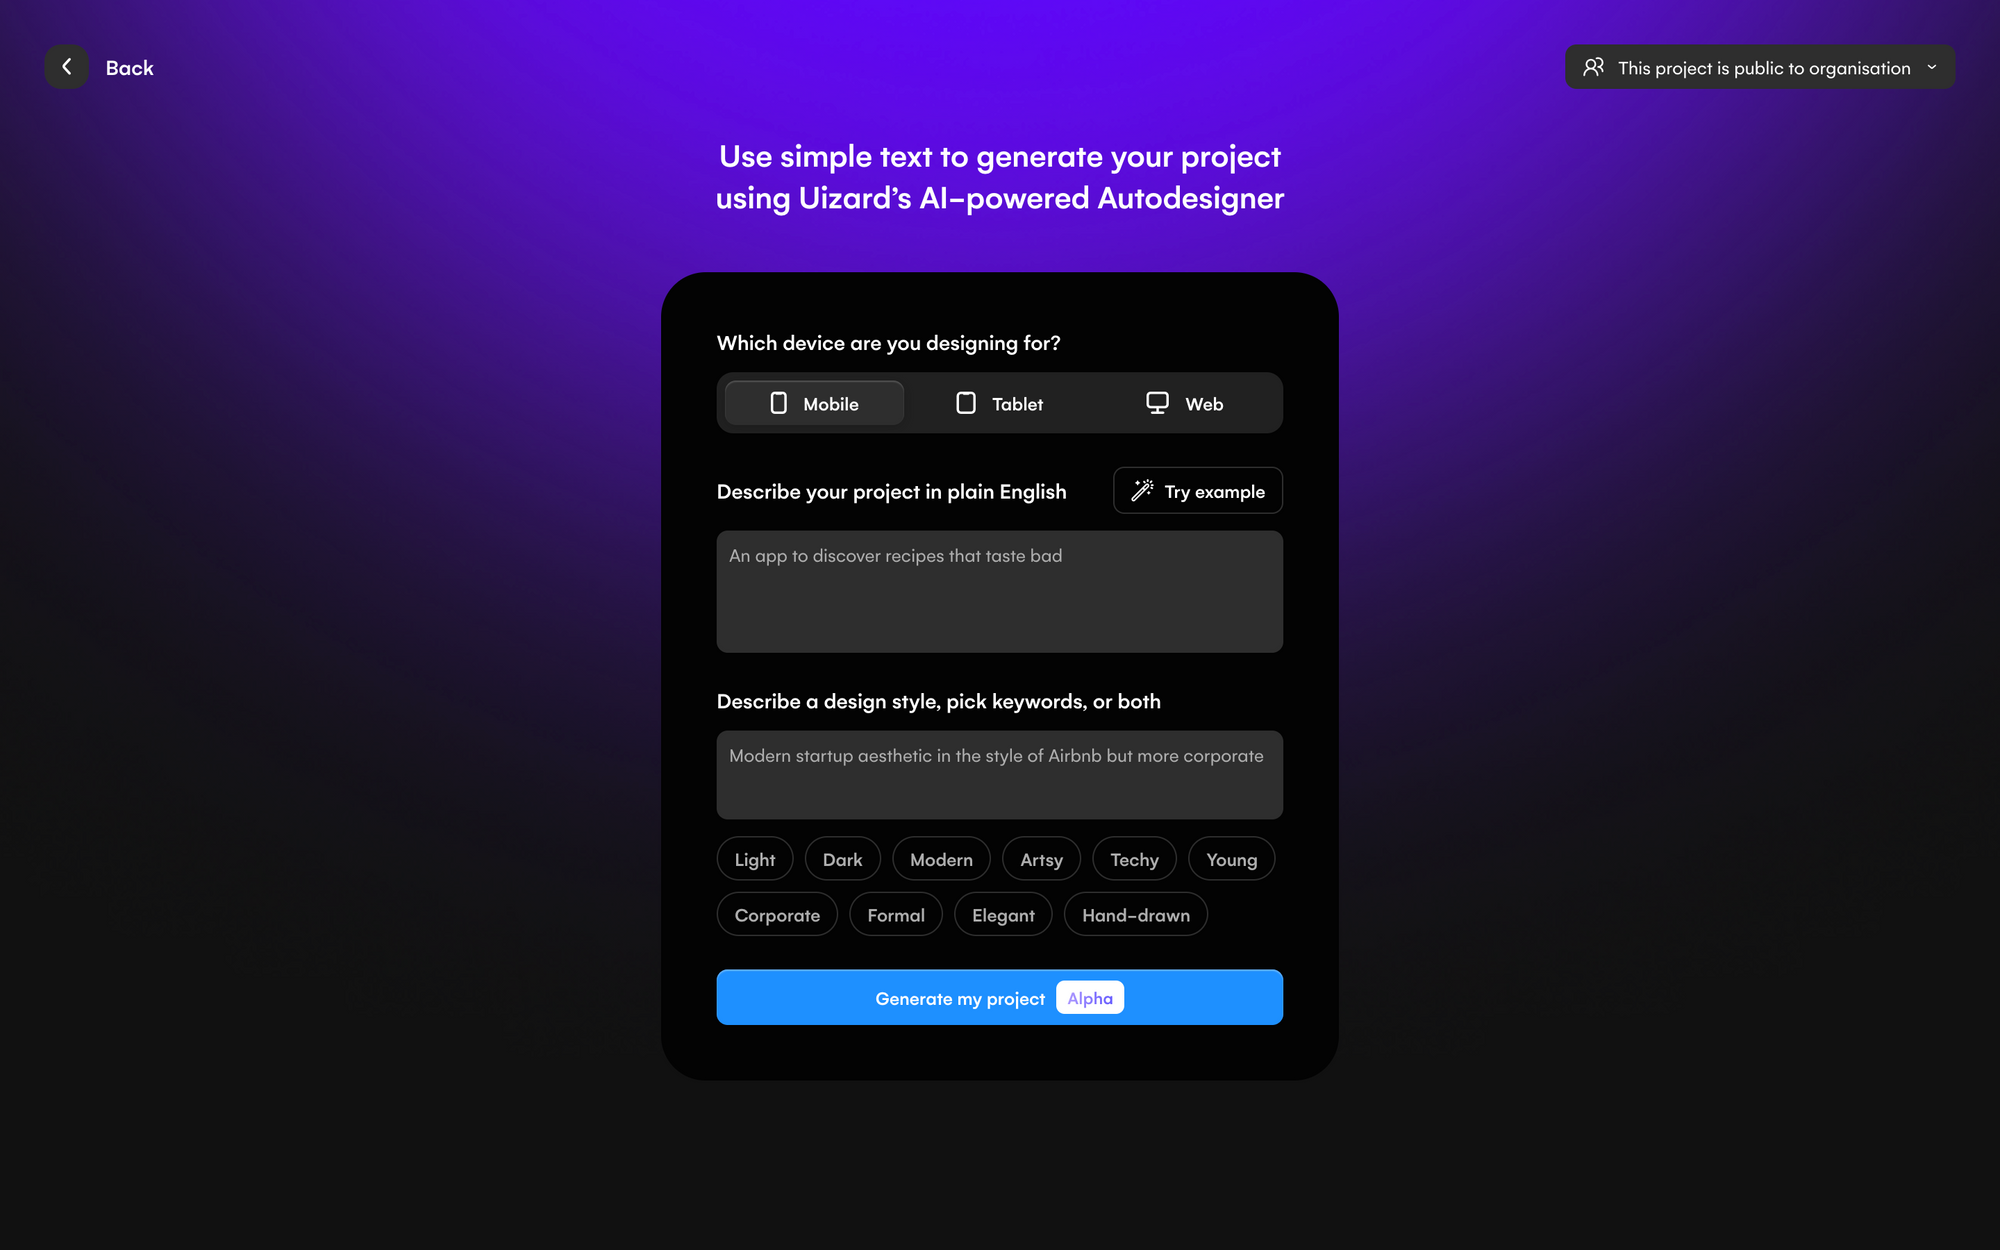 Autodesigner text prompt fields. Dark design with purple gradient and blue button